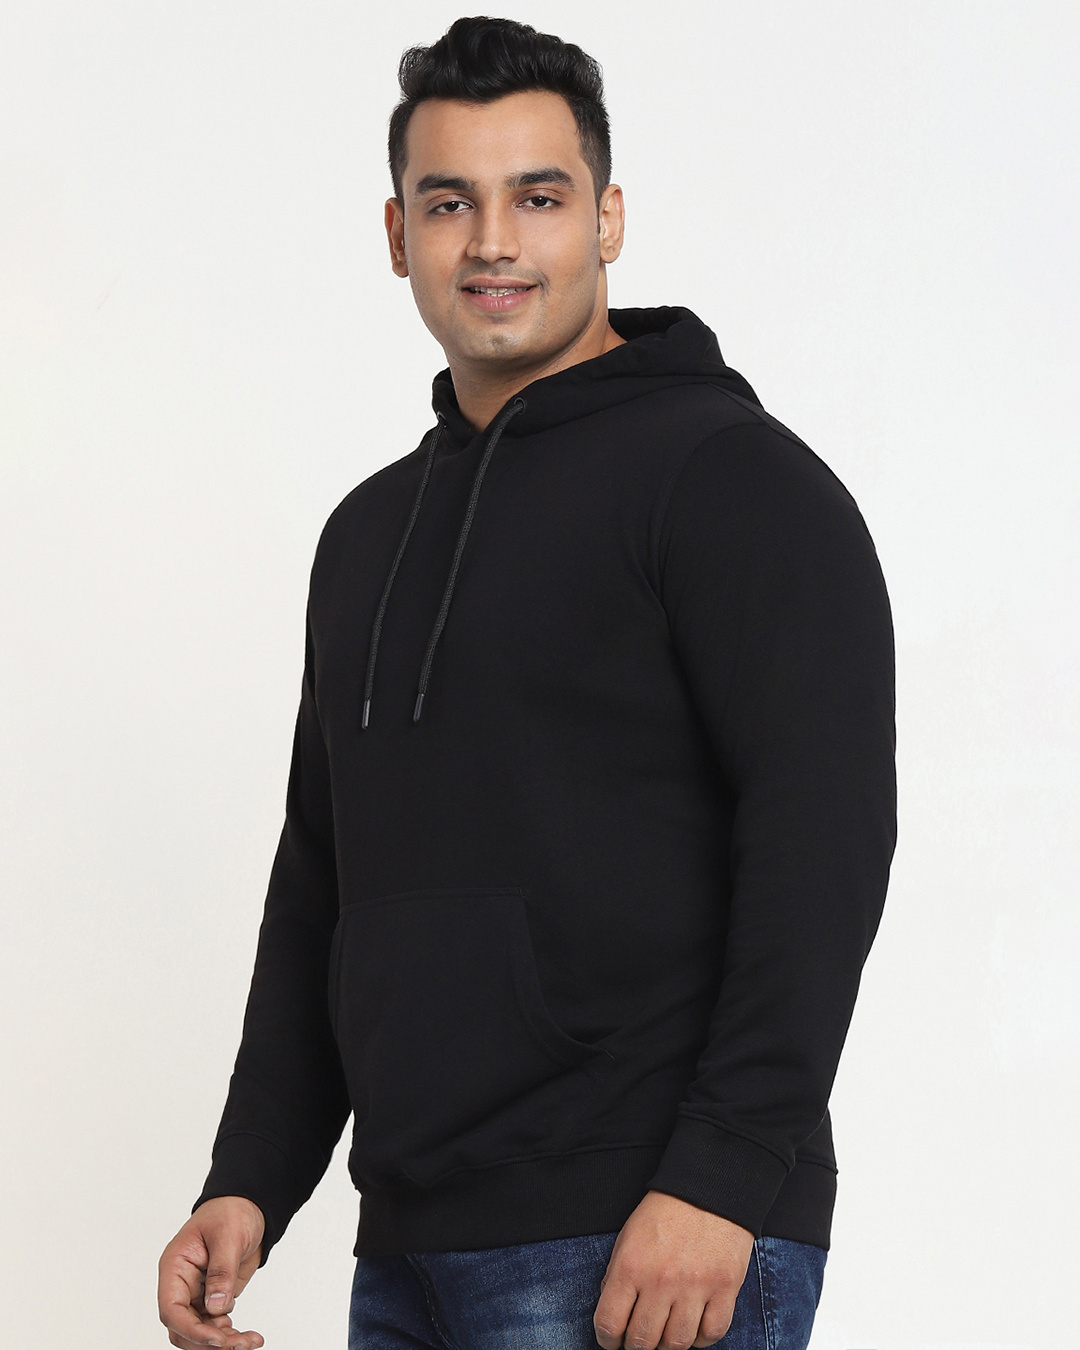 Buy Men's Black Plus Size Hoodies Online at Bewakoof